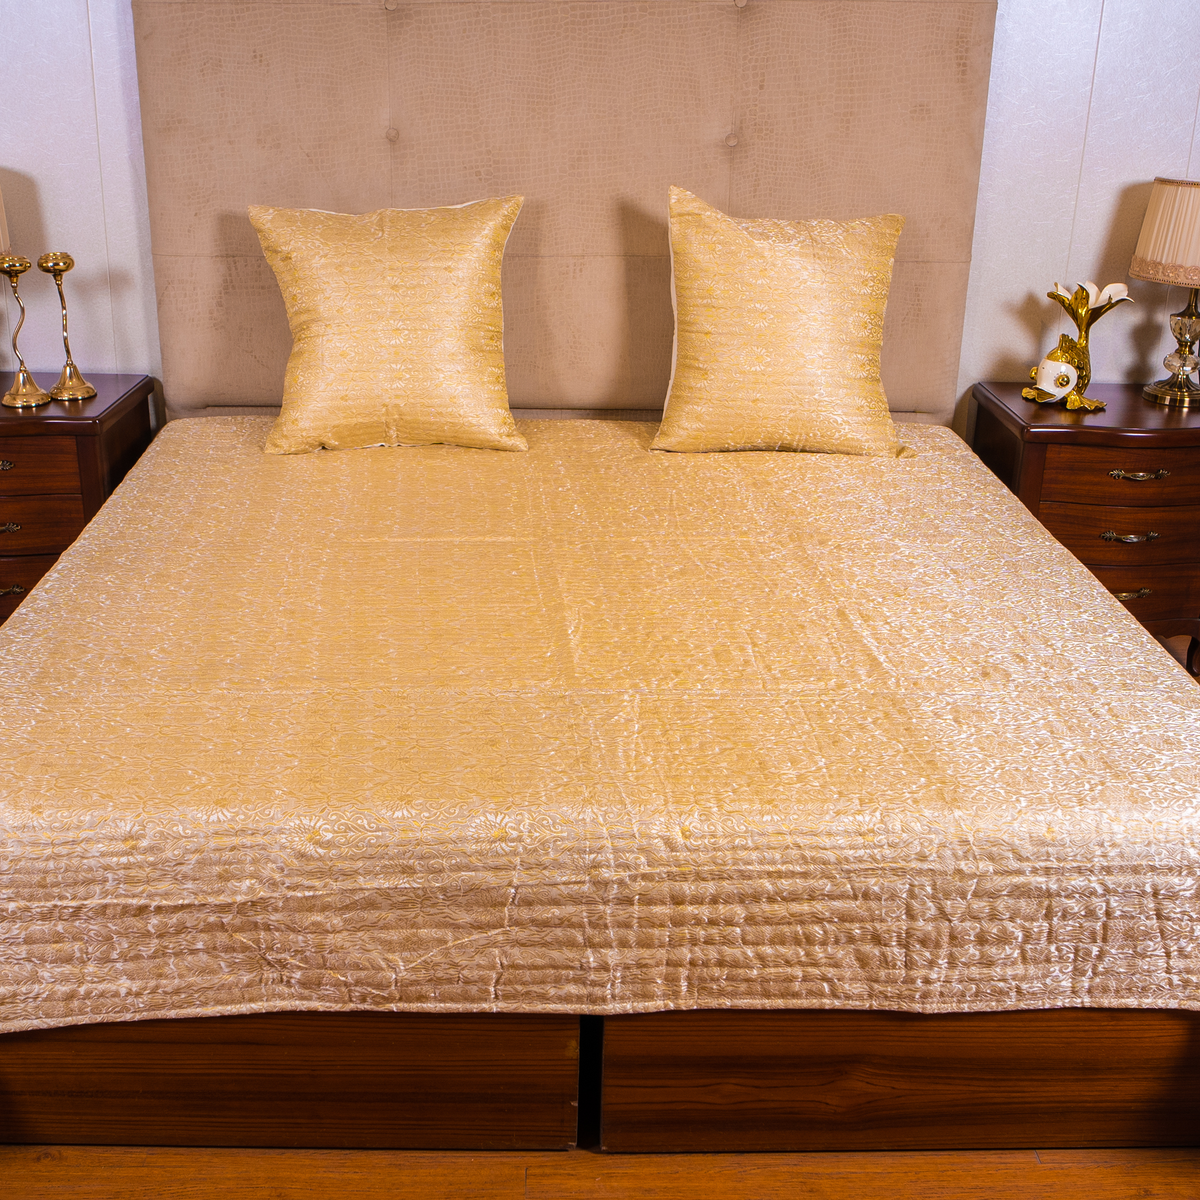 The LuxeLife Golden Silk Bedcover